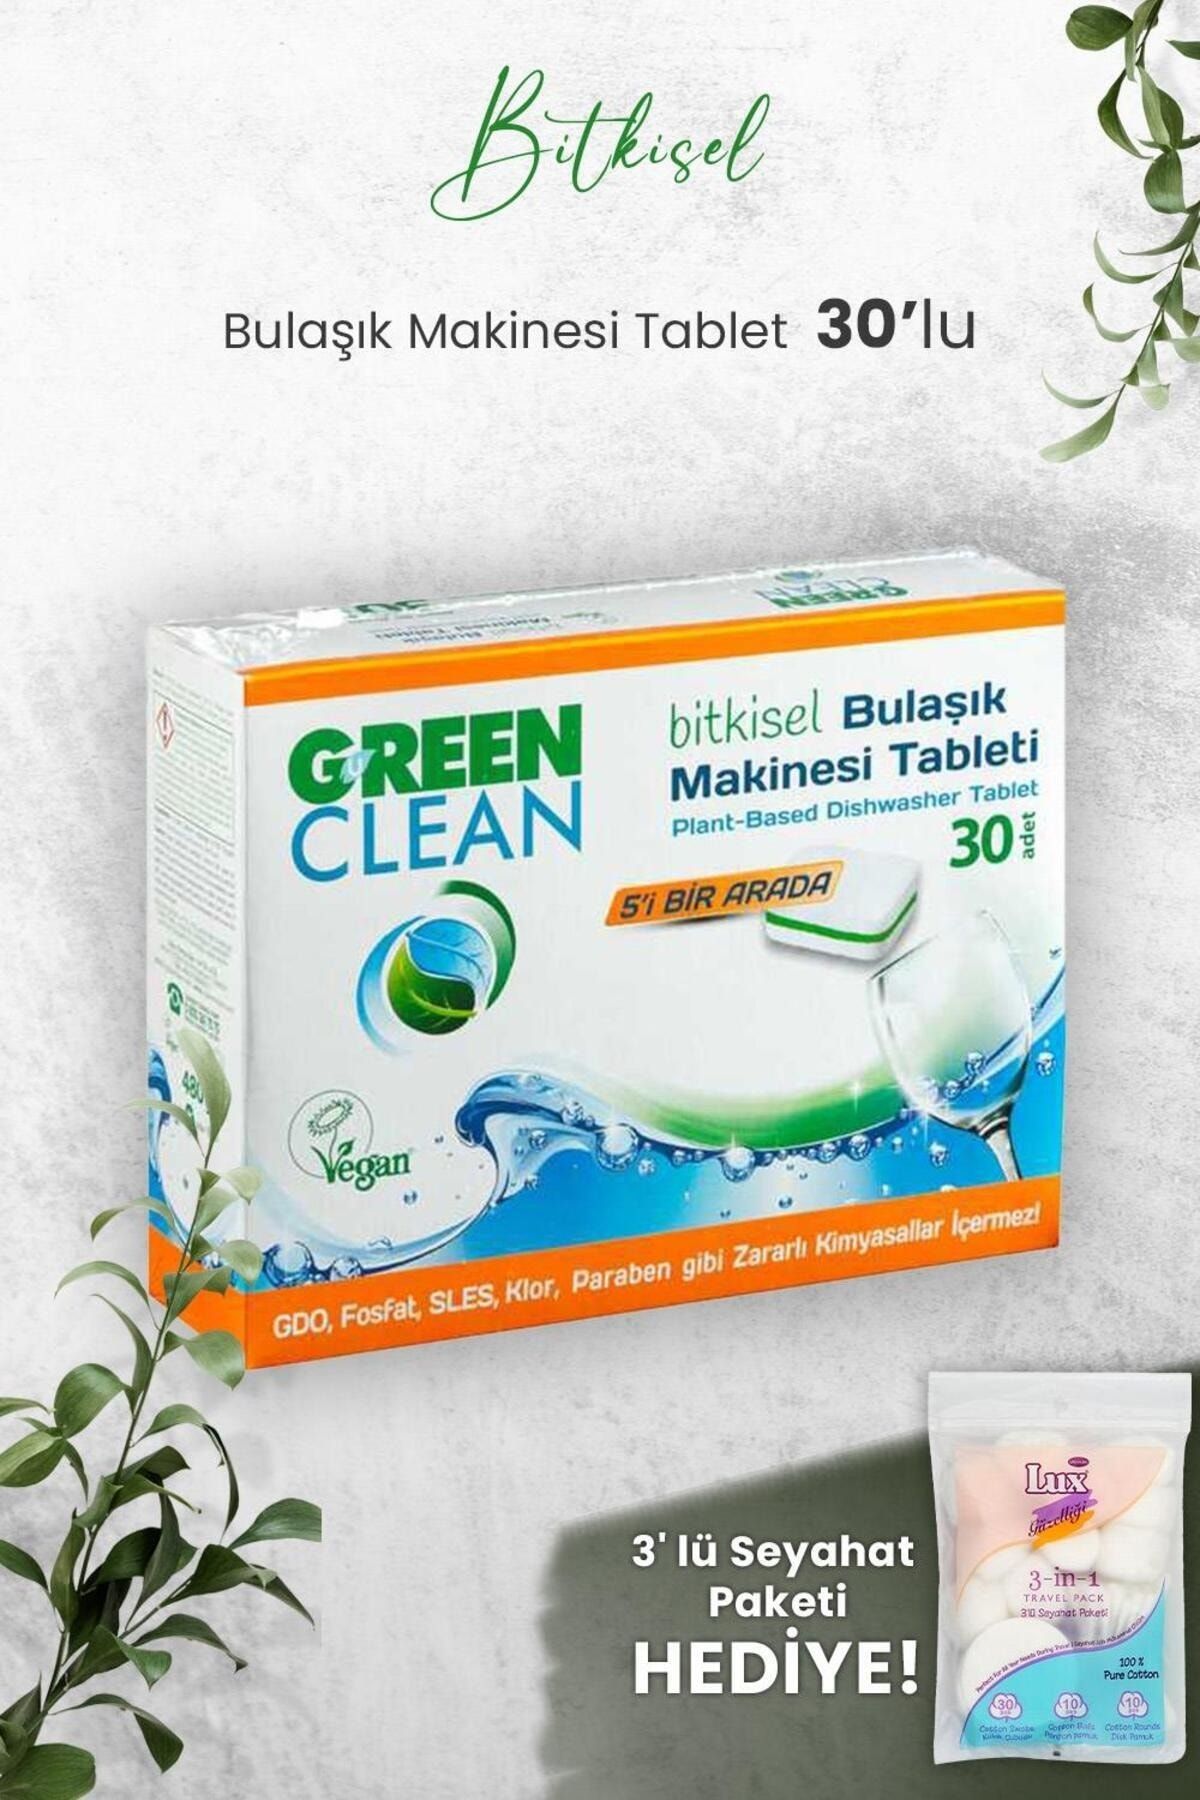 Green Clean U Green Clean Bulaşık Makinesi Tablet 30'lu ve Hediyeli